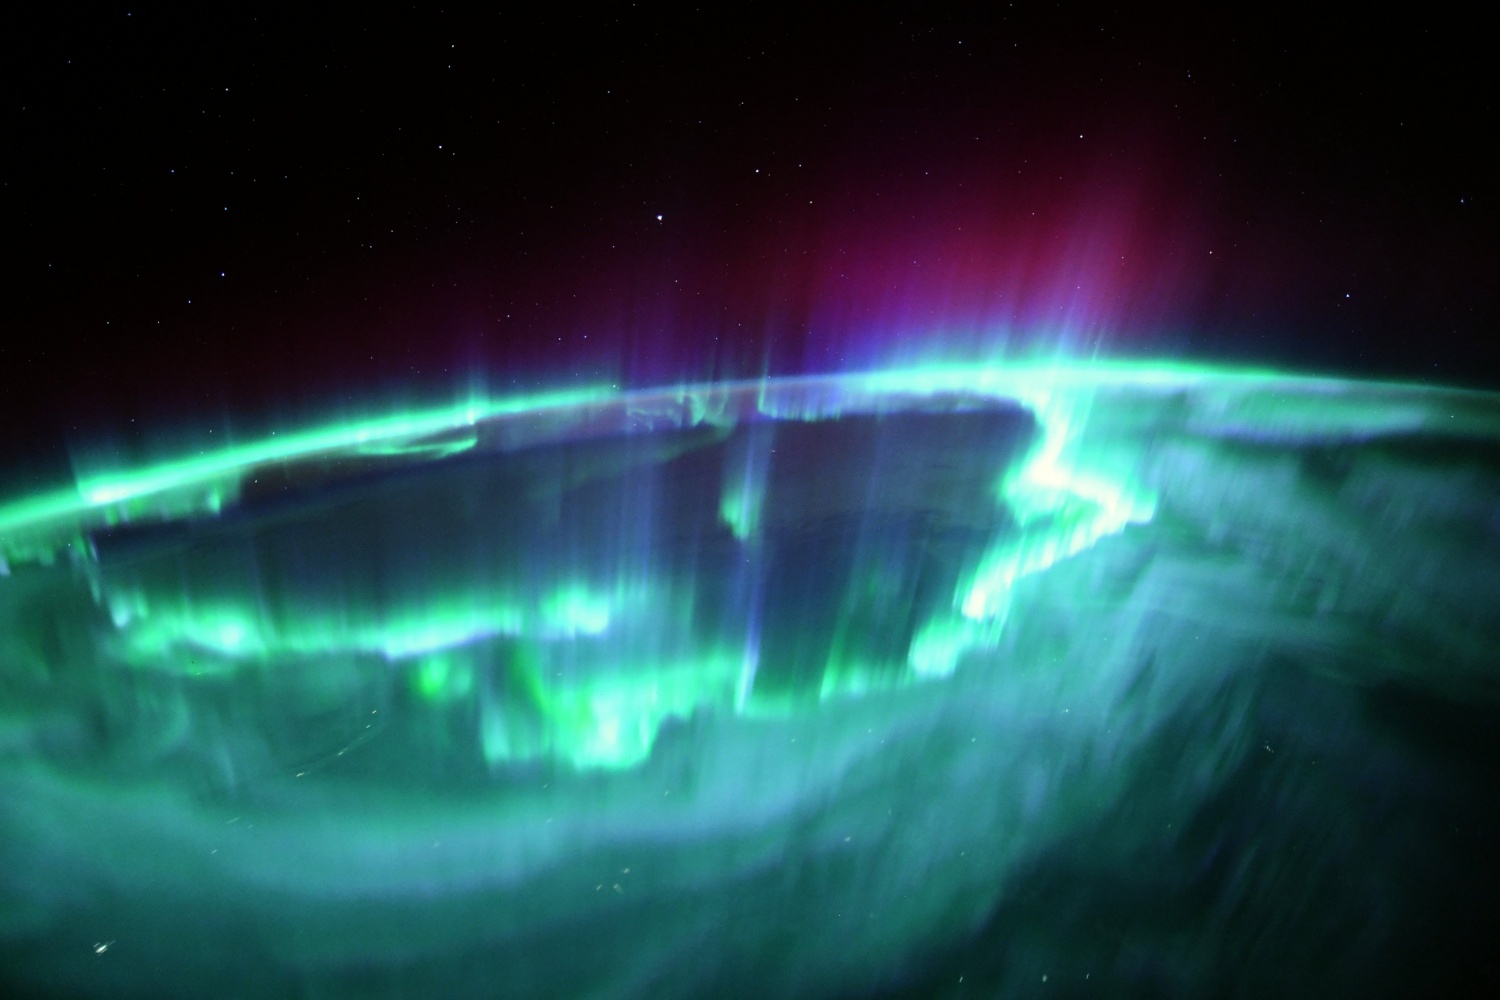 Thomas Pesquet's Photo of an Aurora